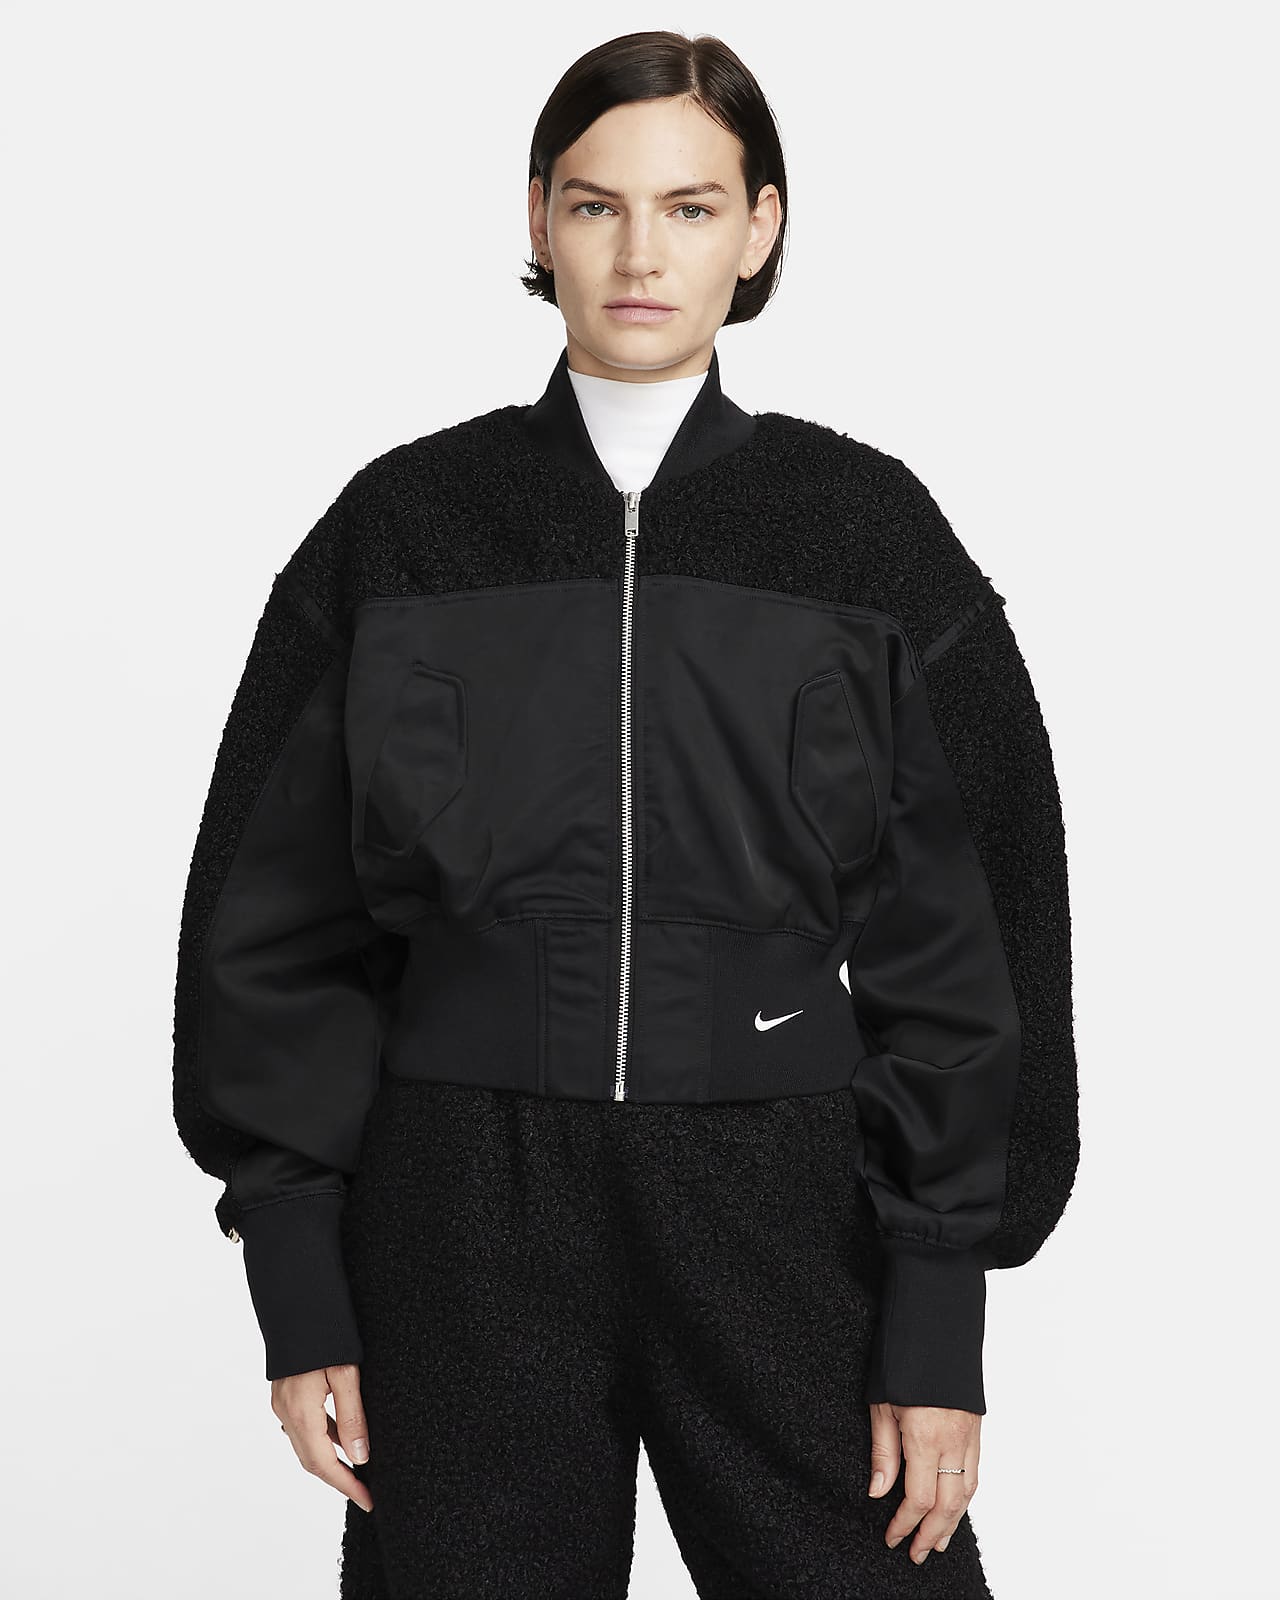 Damska kurtka typu bomberka z puchatej dzianiny Nike Sportswear Collection